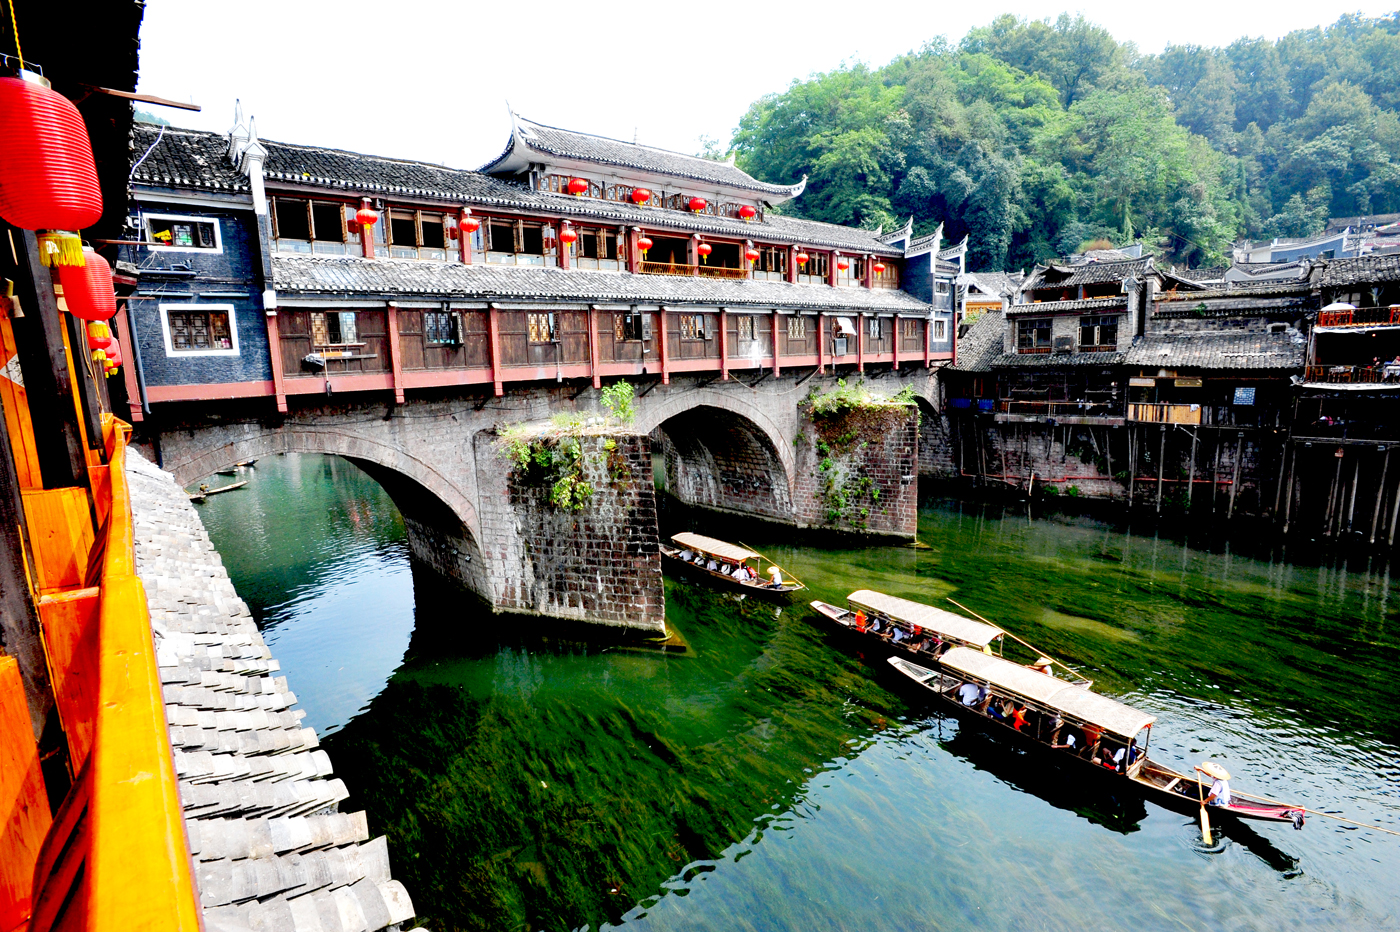 Fenghuang Covered Bridge